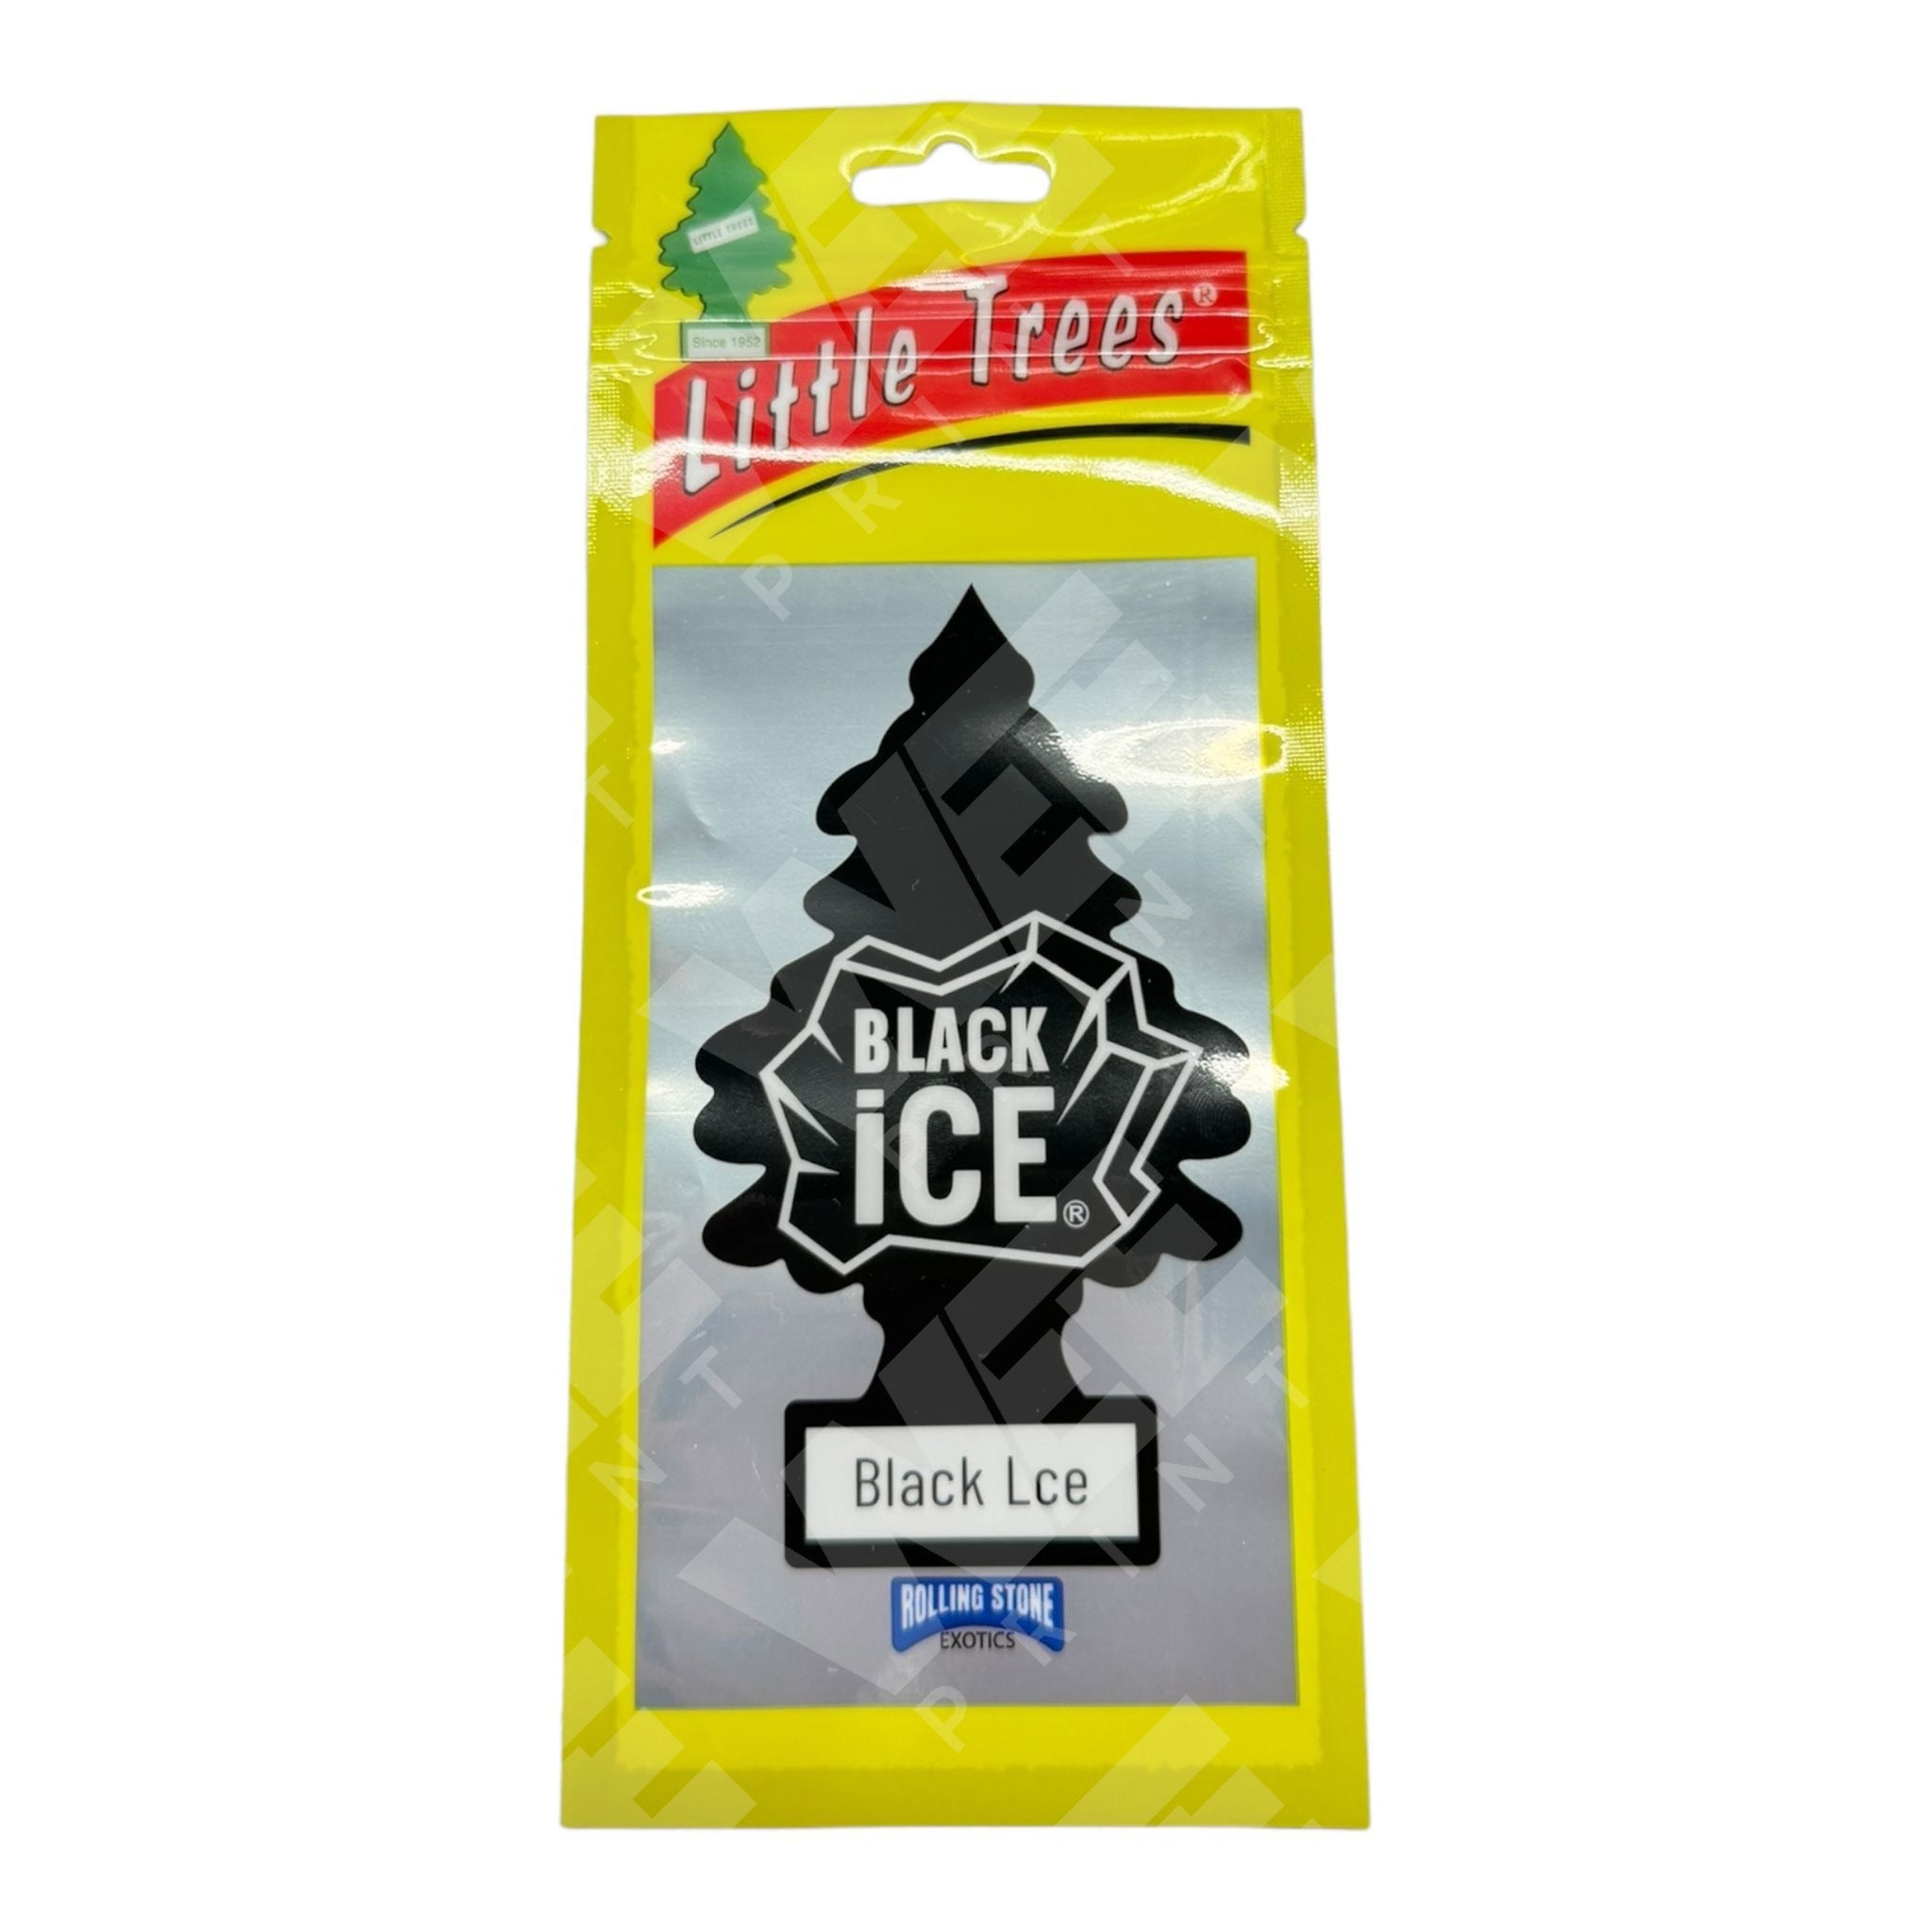 Little Trees Black Ice 3.5G Mylar Bags